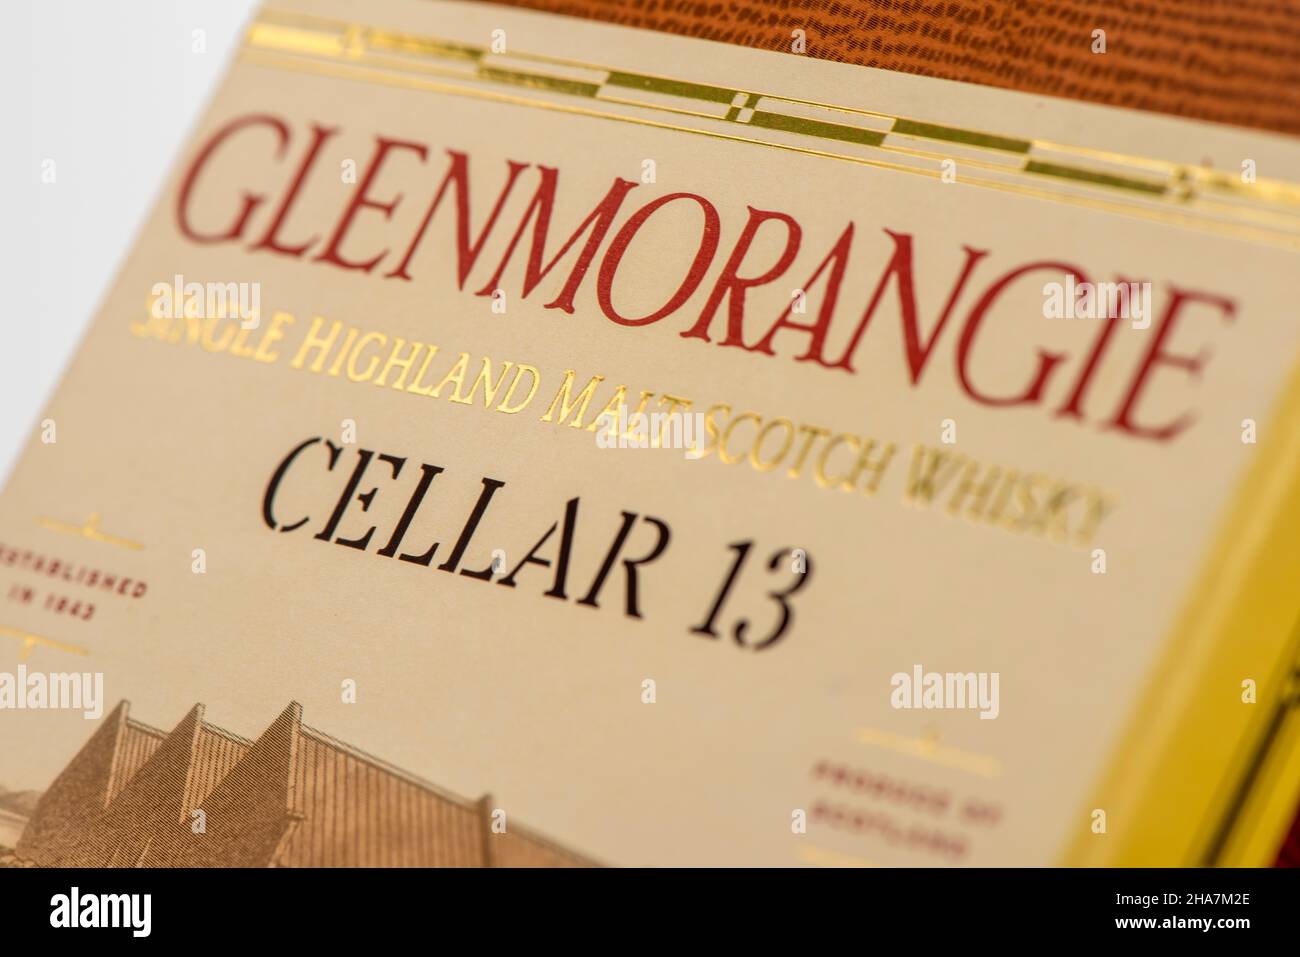 EDINBURGH, SCOTLAND - DECEMBER 10, 2021: box of GLENMORANGIE CELLAR 13 single malt scotch whisky Stock Photo